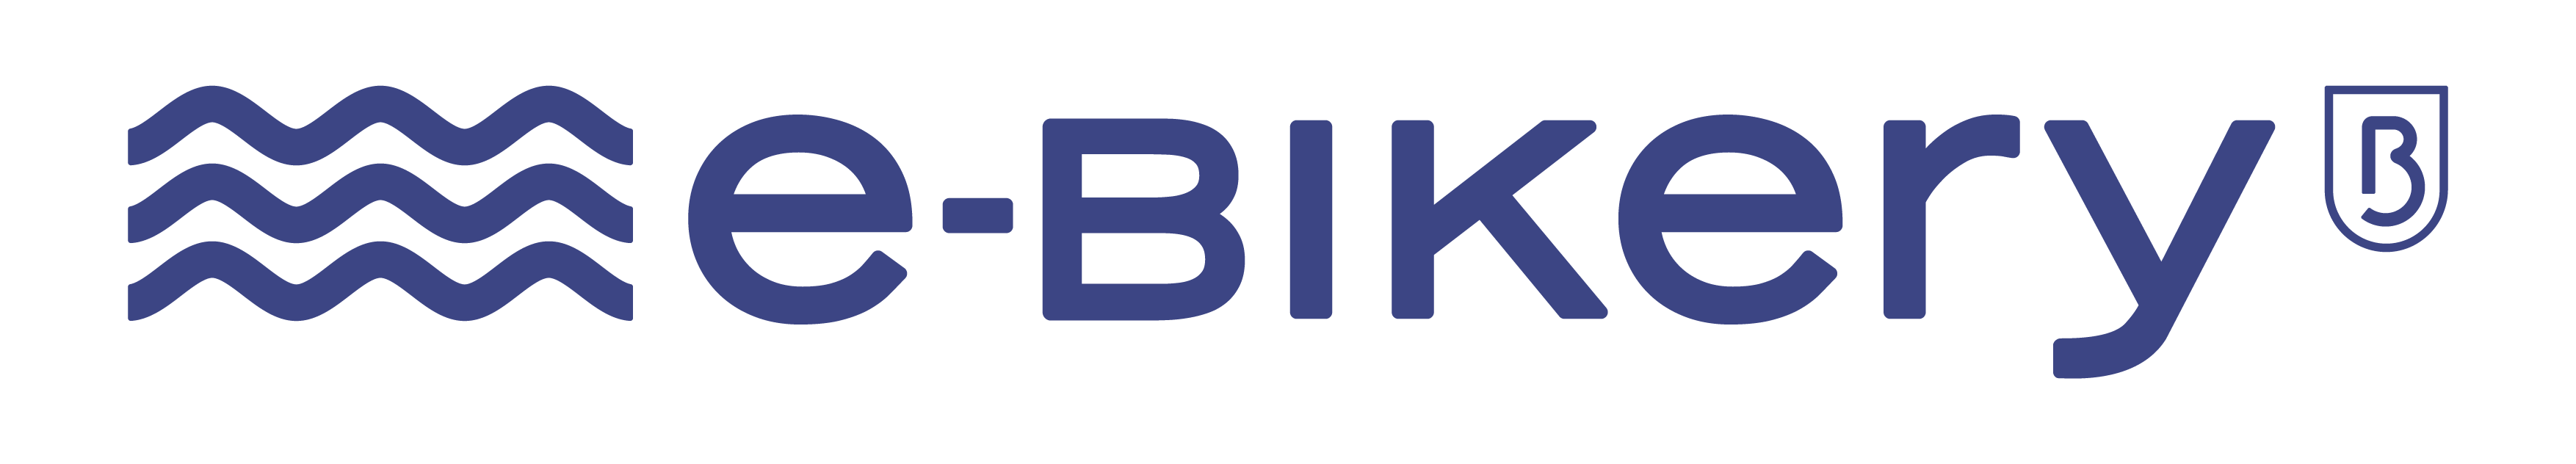 E-Bikery Home Page